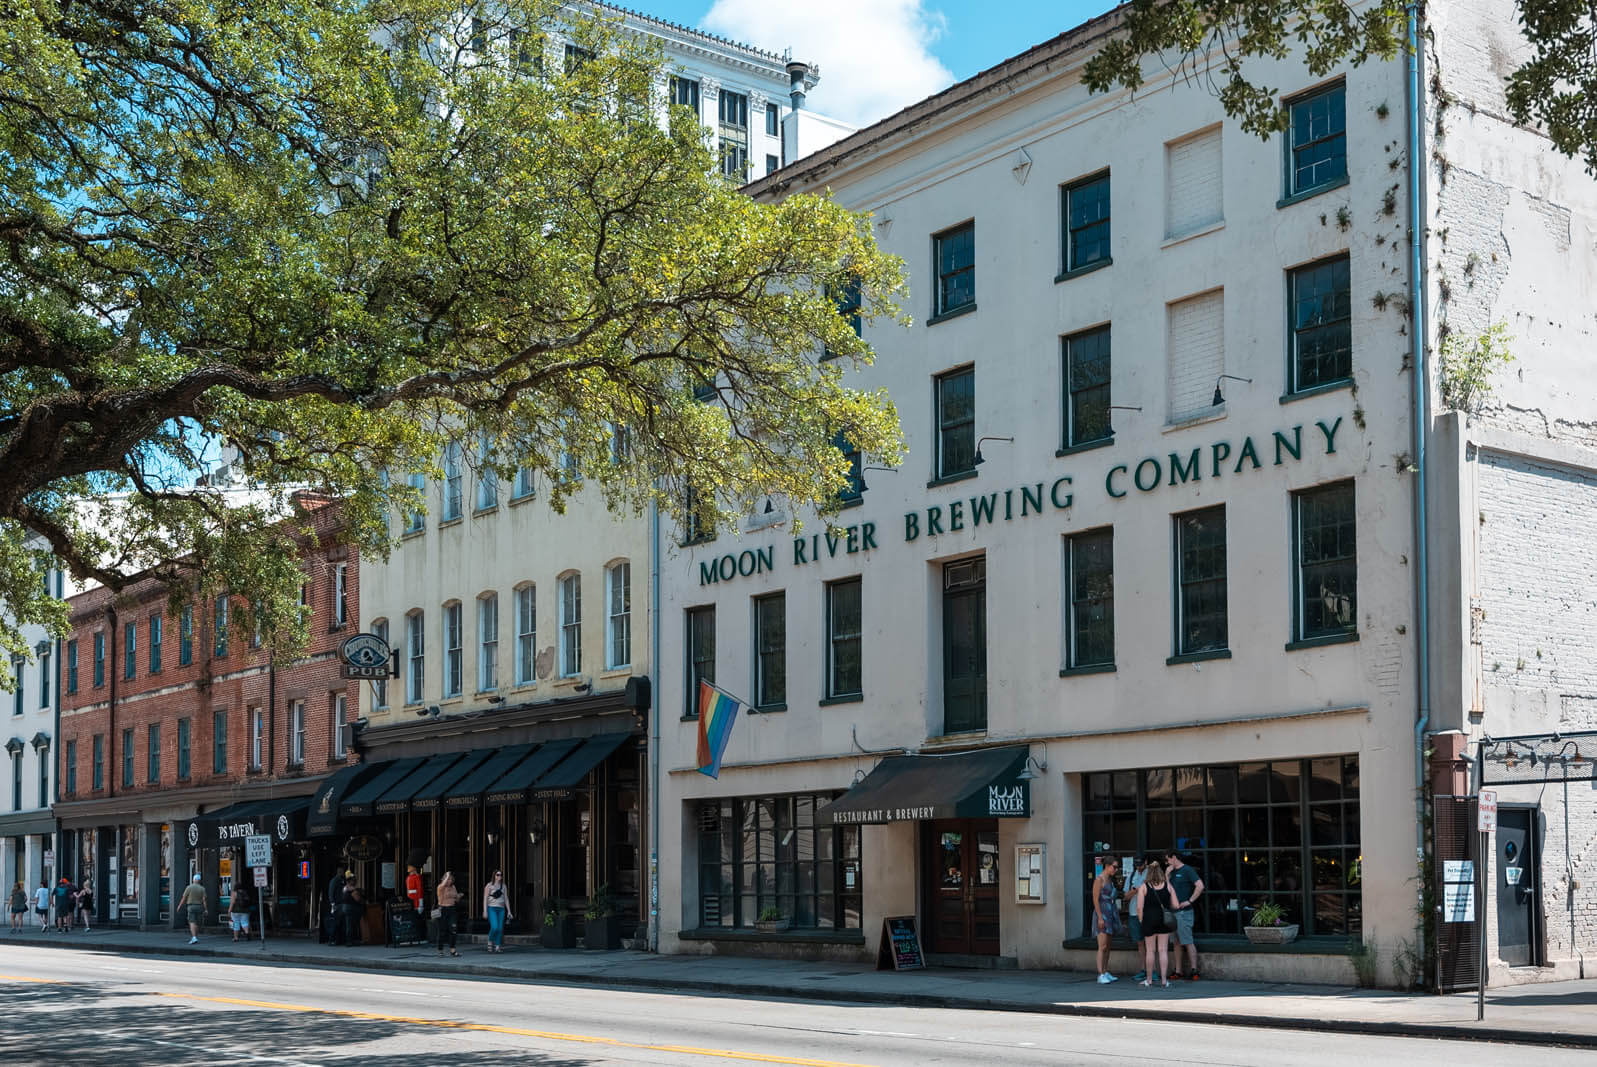 Moon River Brewing Company in Savannah Georgia